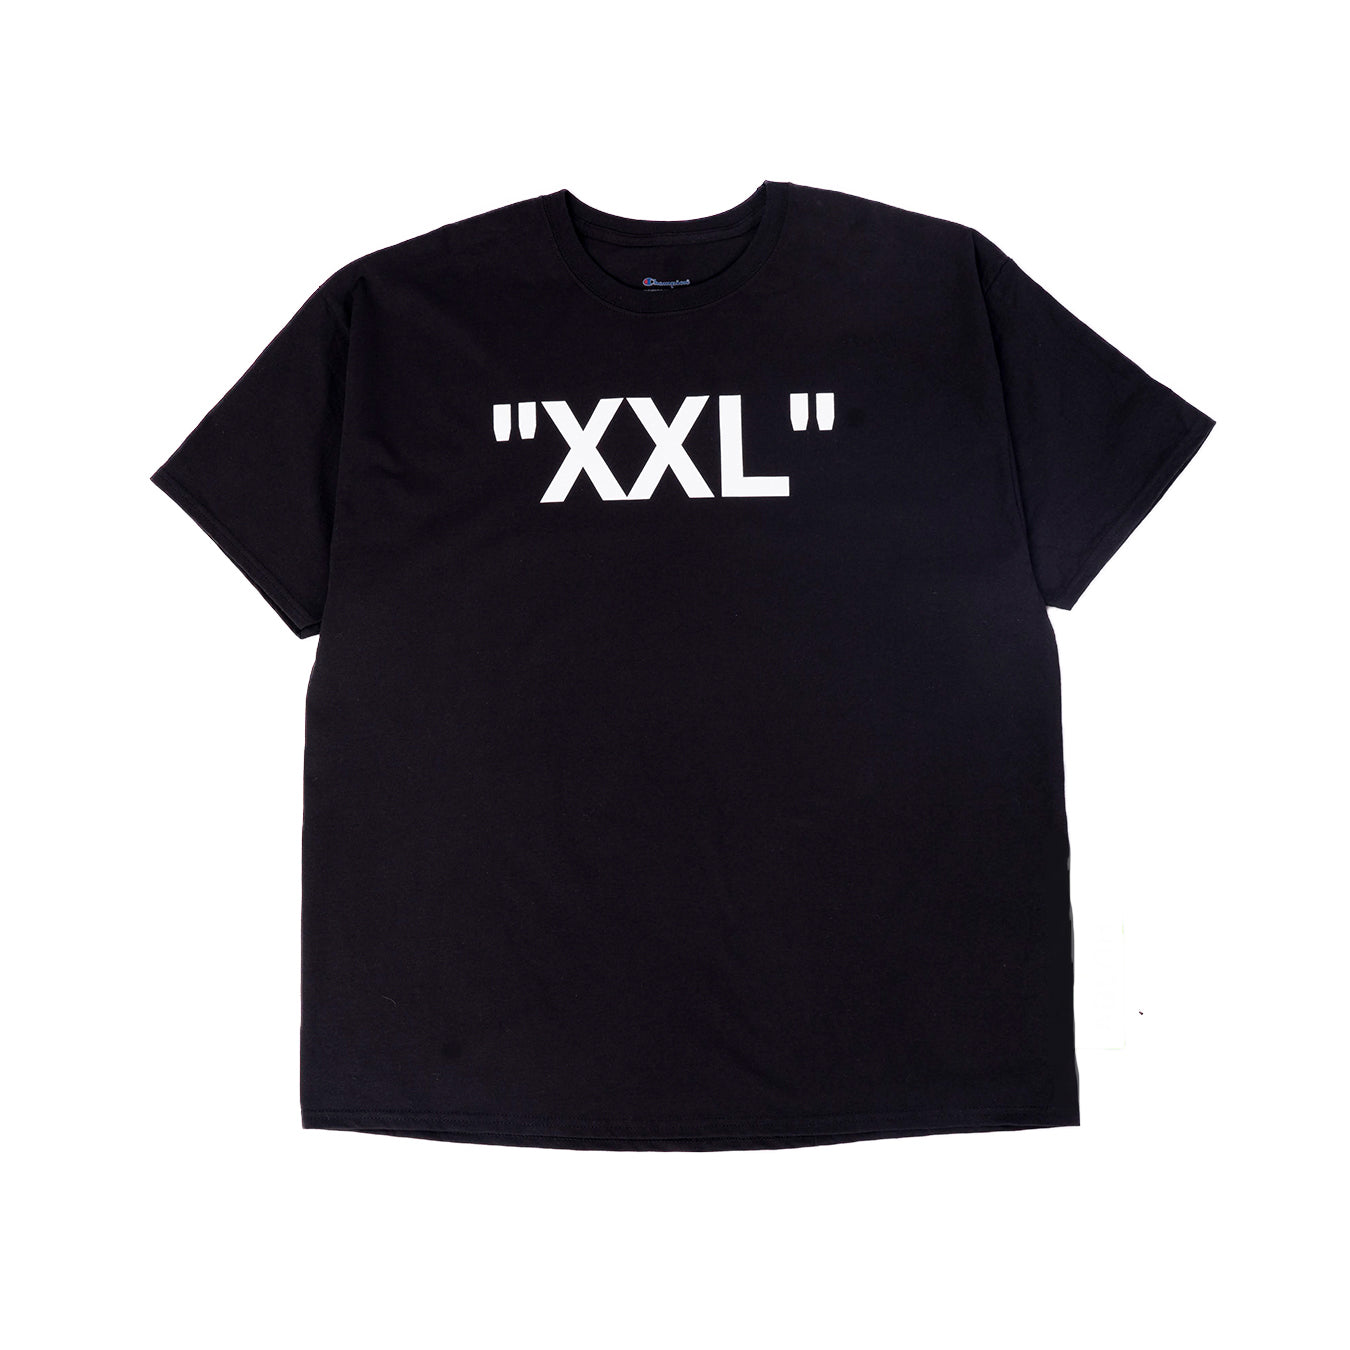 T-shirt Virgil Abloh x Ikea White size XL International in Cotton